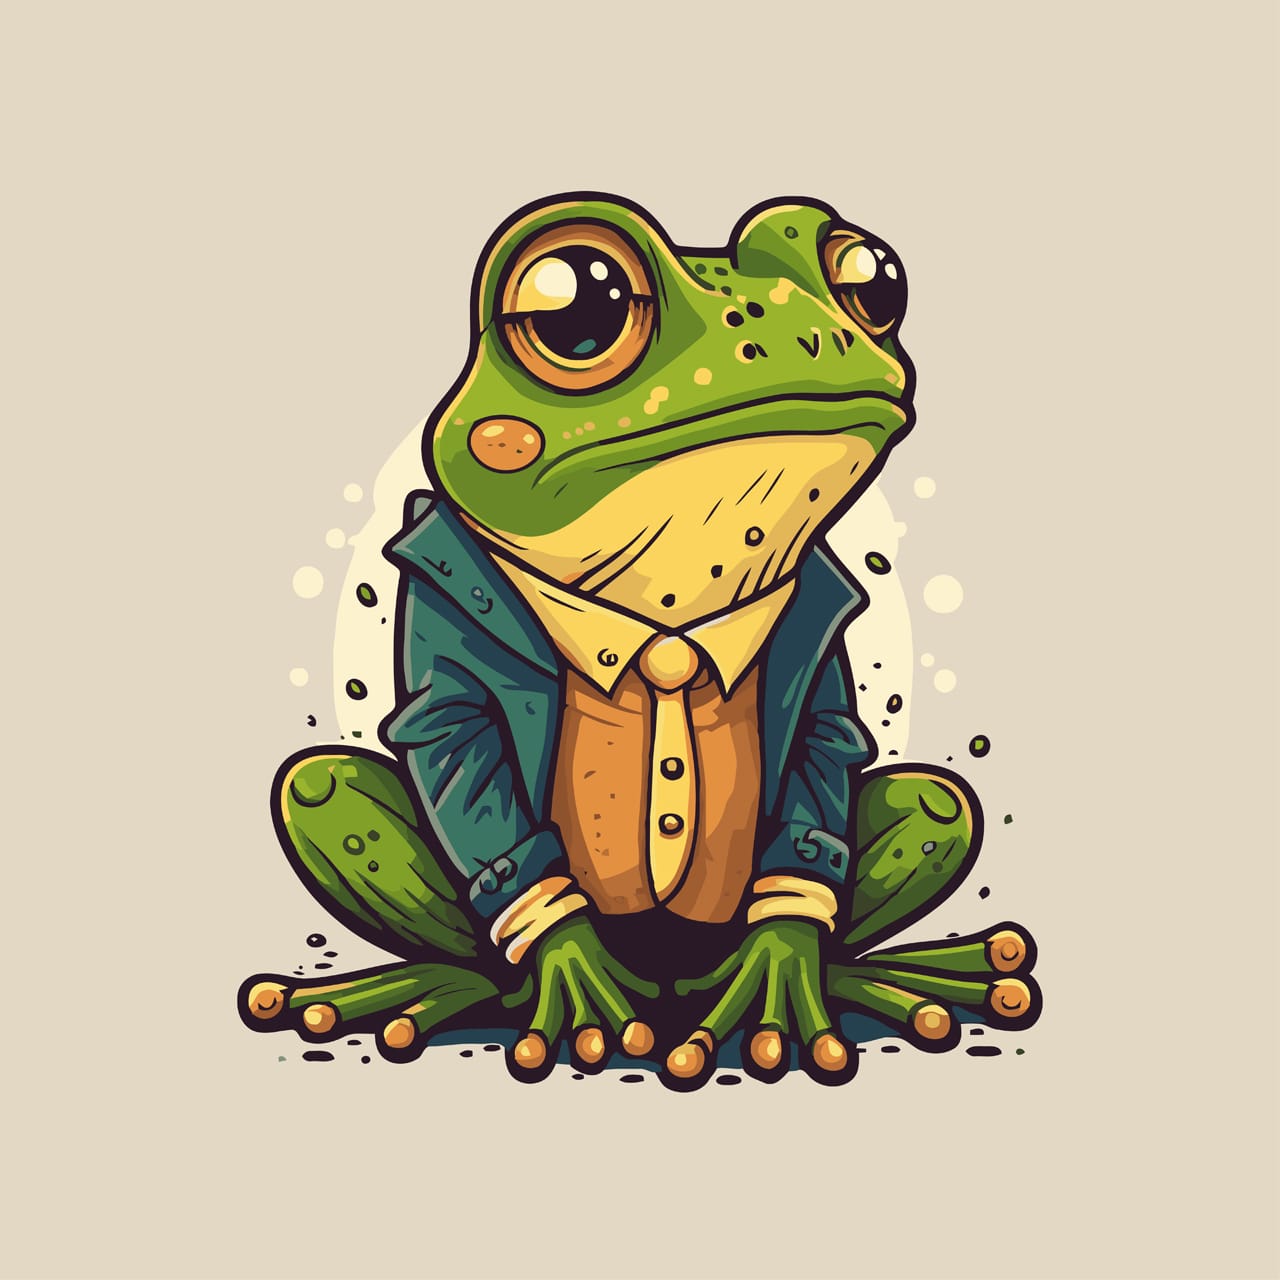 Green frog character logo mascot design cartoon business branding